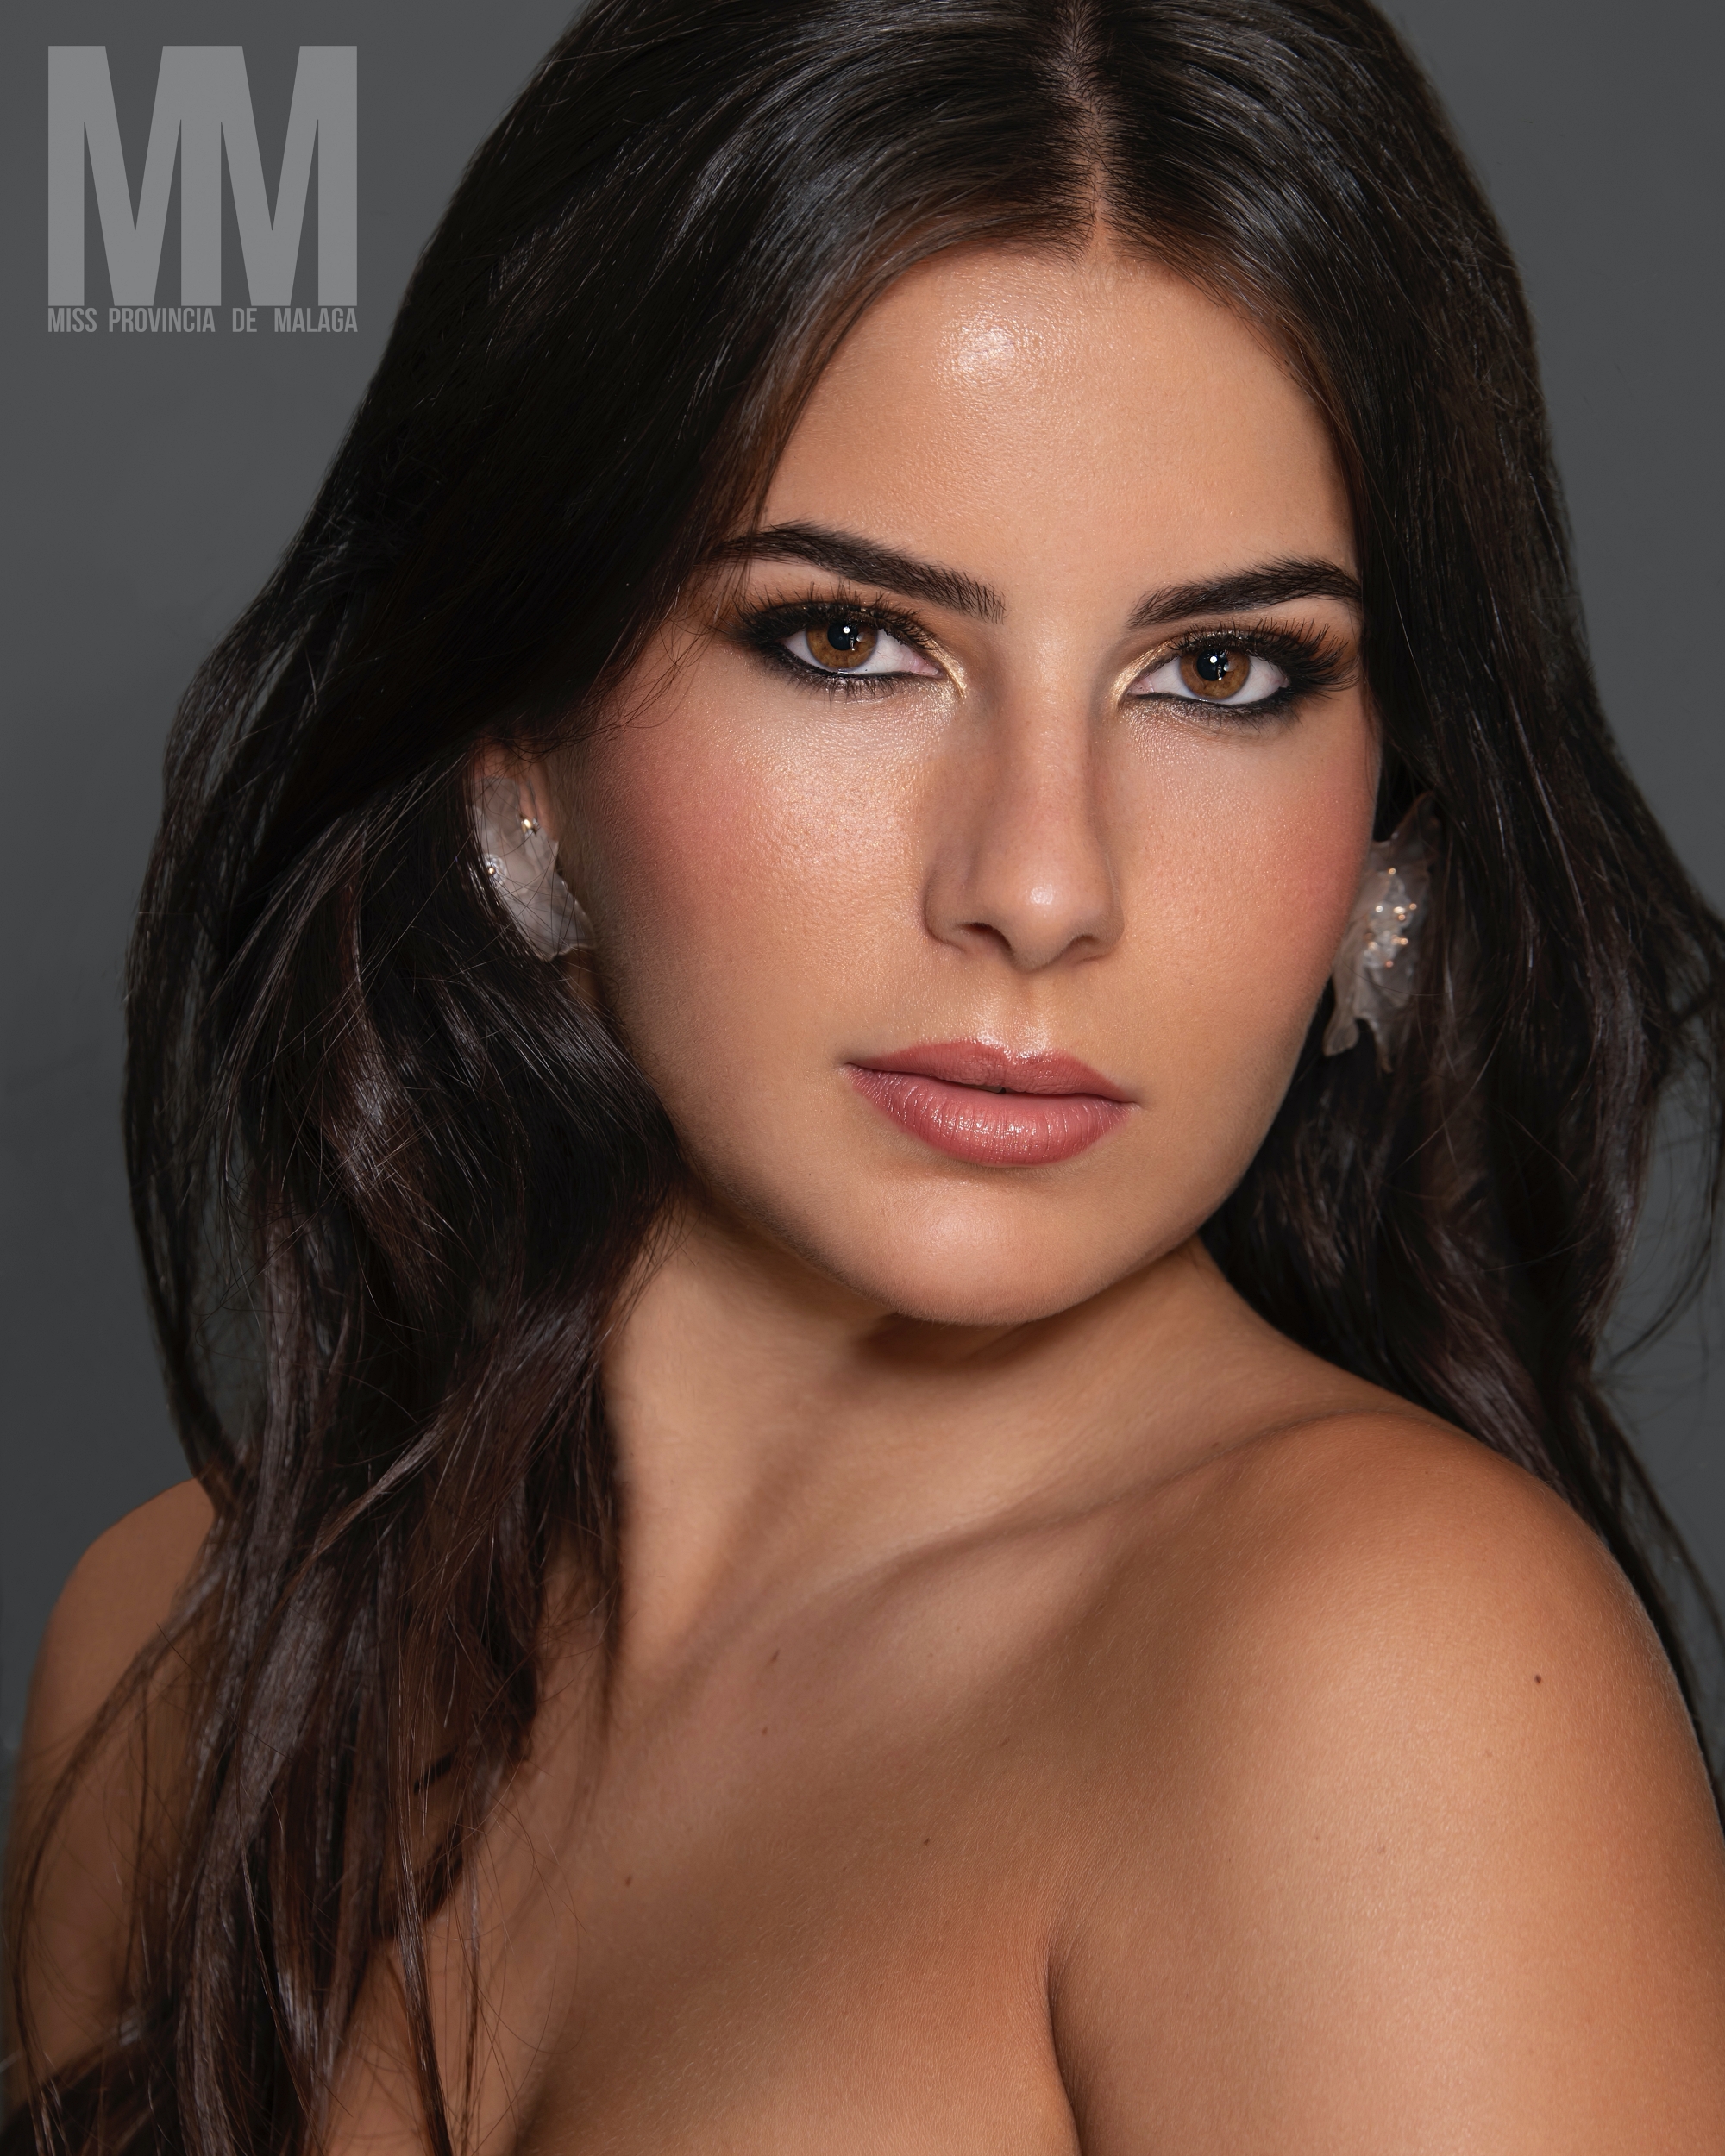 Miss Provincia de Malaga 2022 MISS TORREMOLINOS Alba Hermoso 1